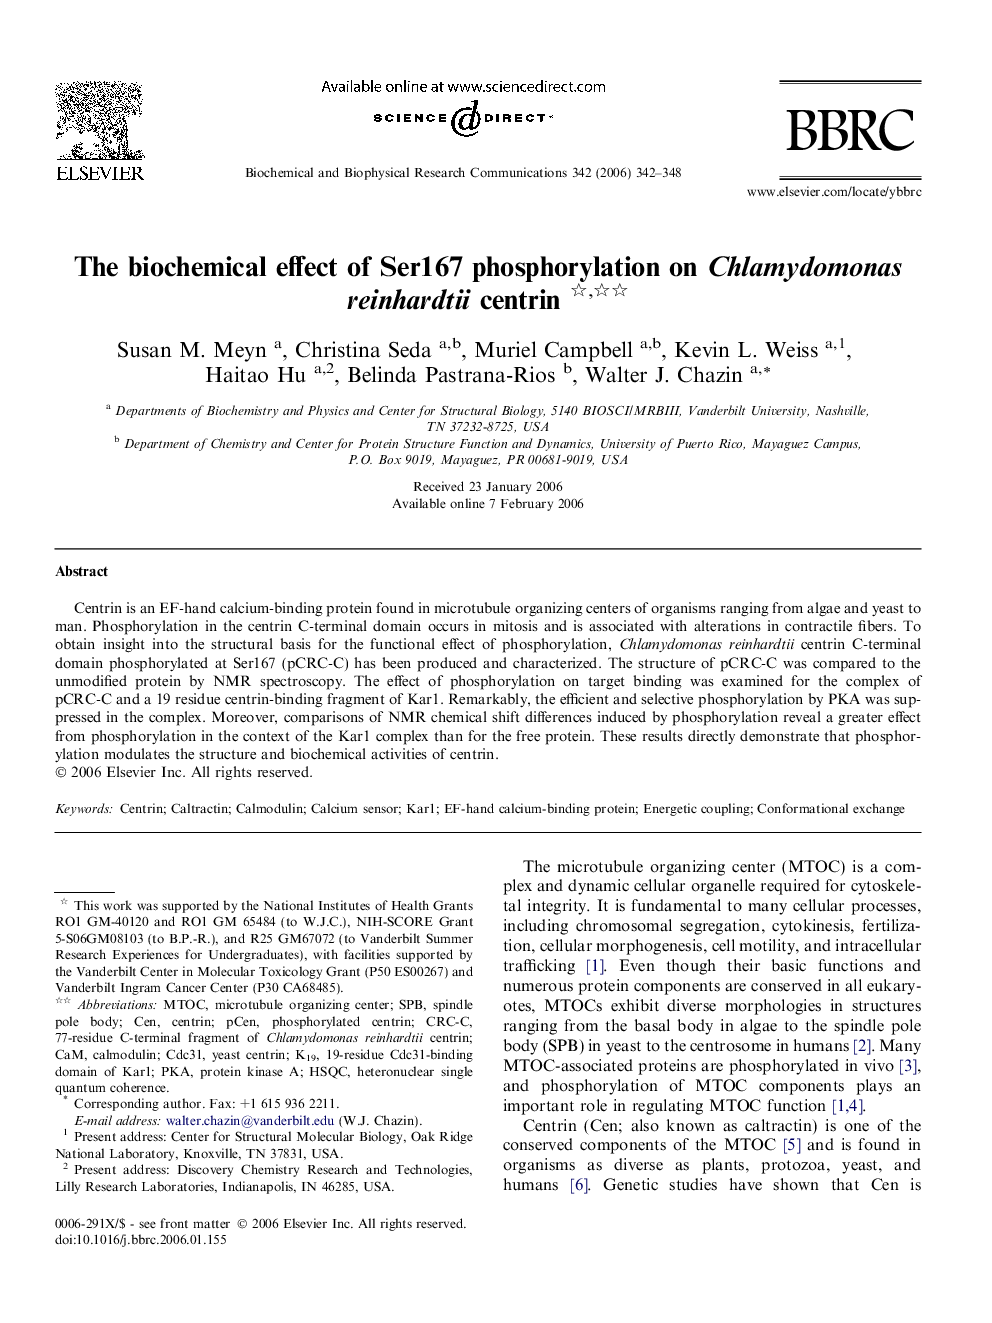 The biochemical effect of Ser167 phosphorylation on Chlamydomonas reinhardtii centrin